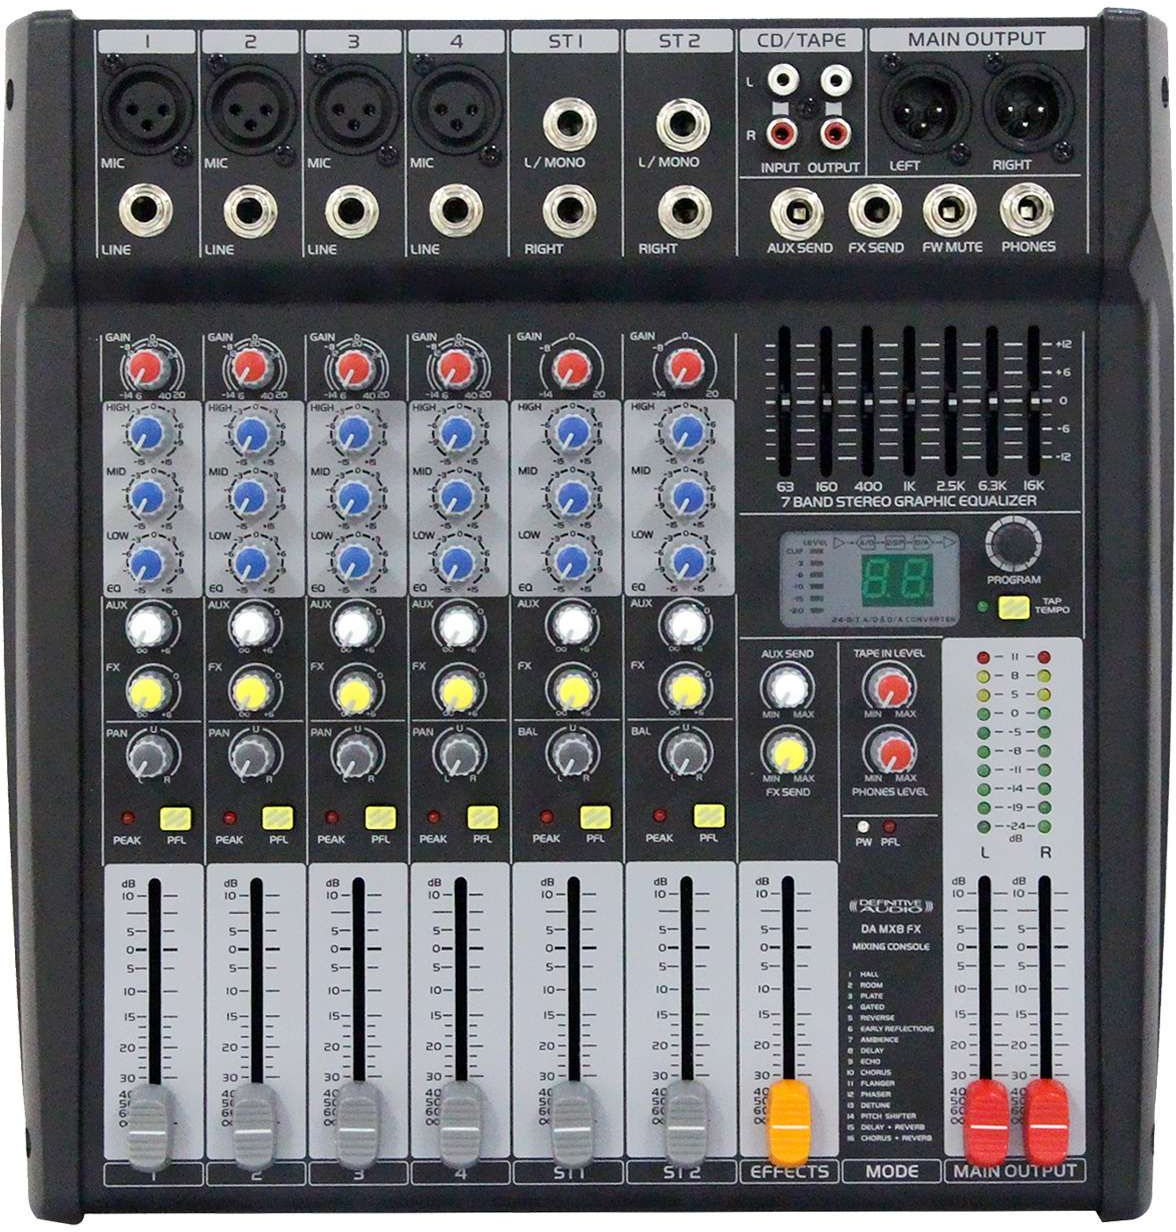 Definitive Audio Da Mx8 Fx2 - Analog mixing desk - Main picture